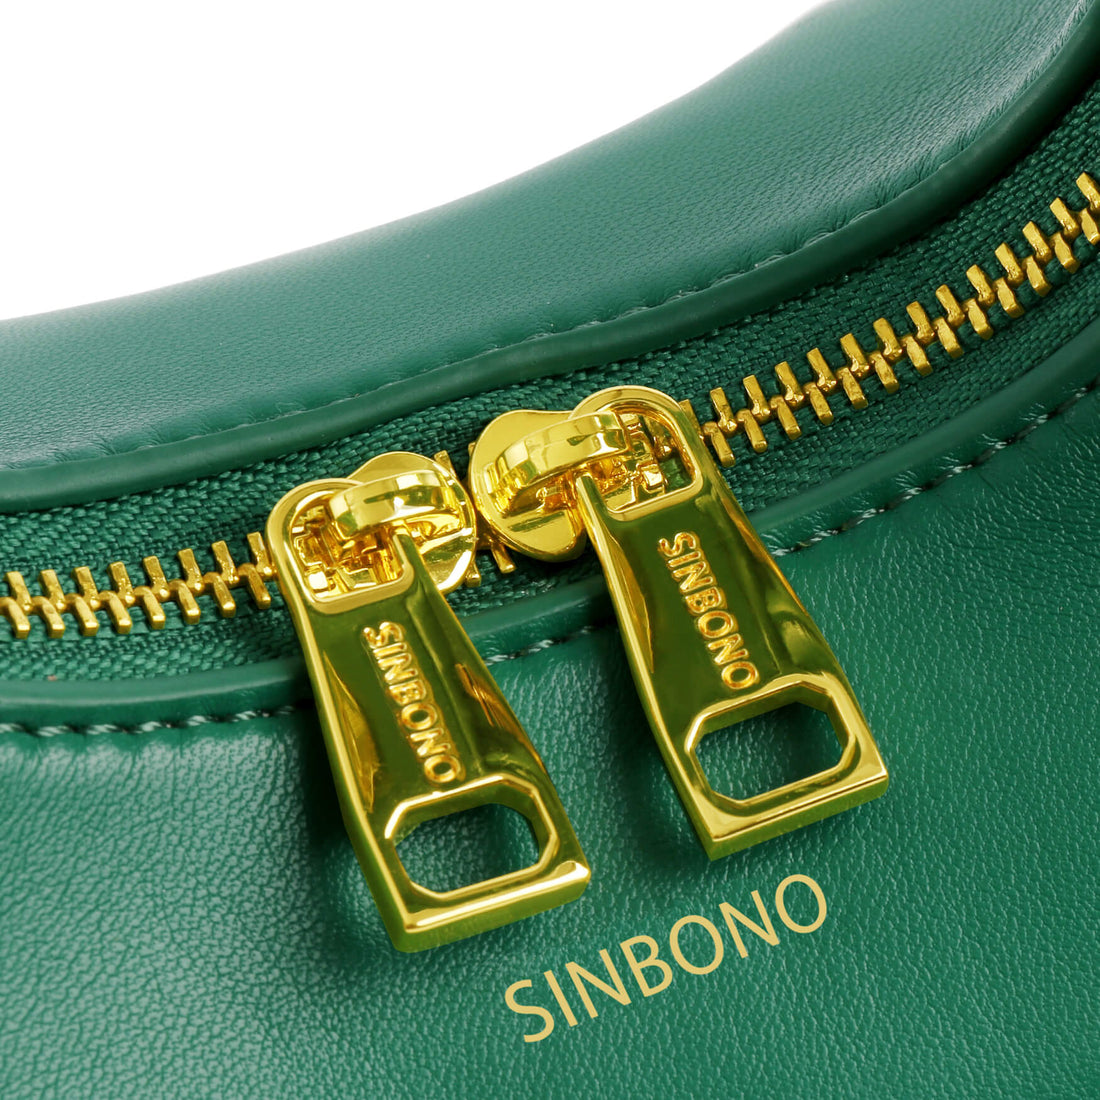 SINBONO Leather Purses and Handbags - Discount Leather Handbags